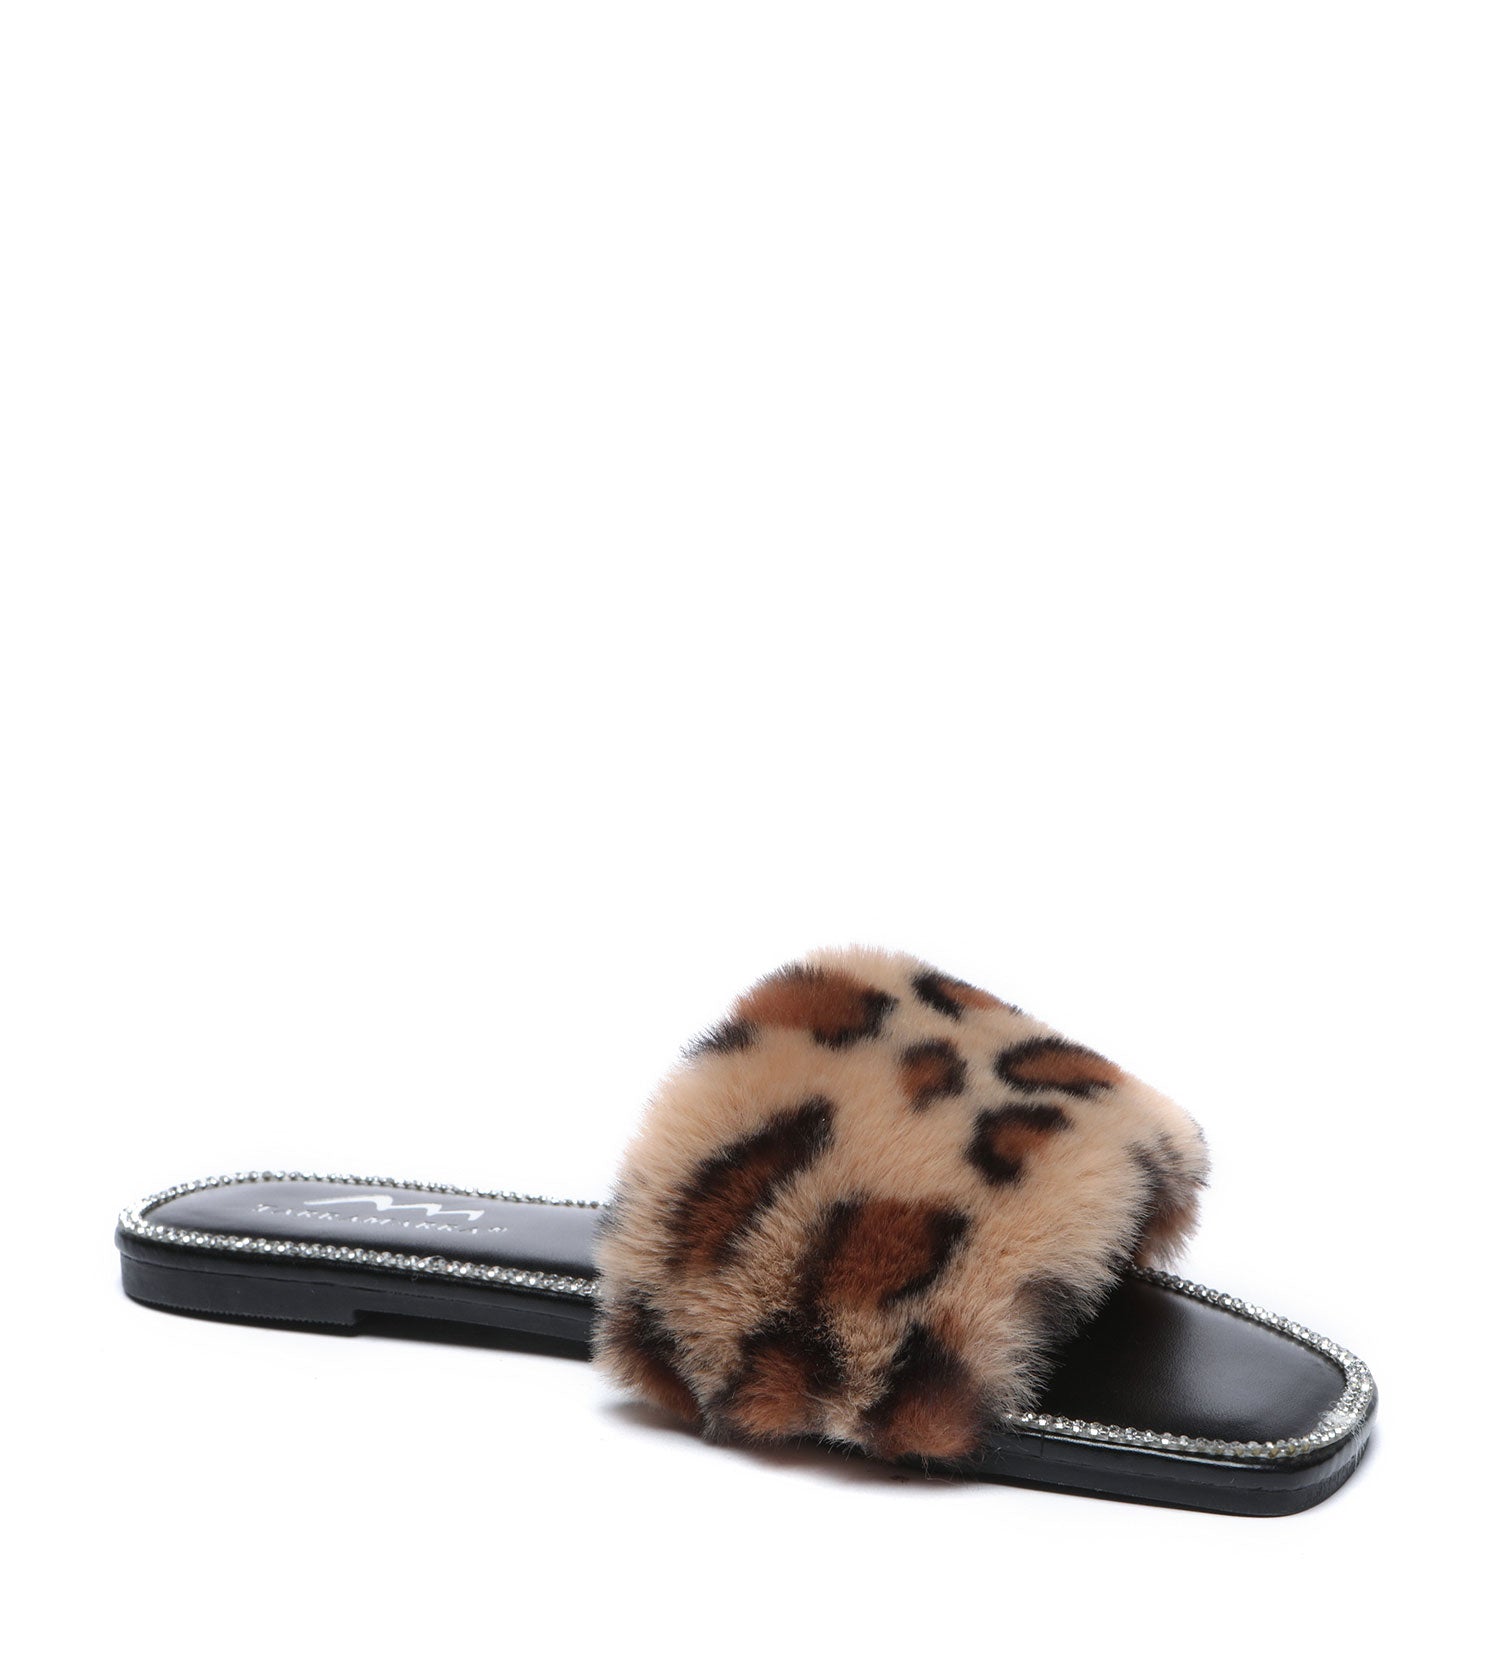 TARRAMARRA Fluffy Diamante Sandals for Women - TA7058-Sandals-PEROZ Accessories